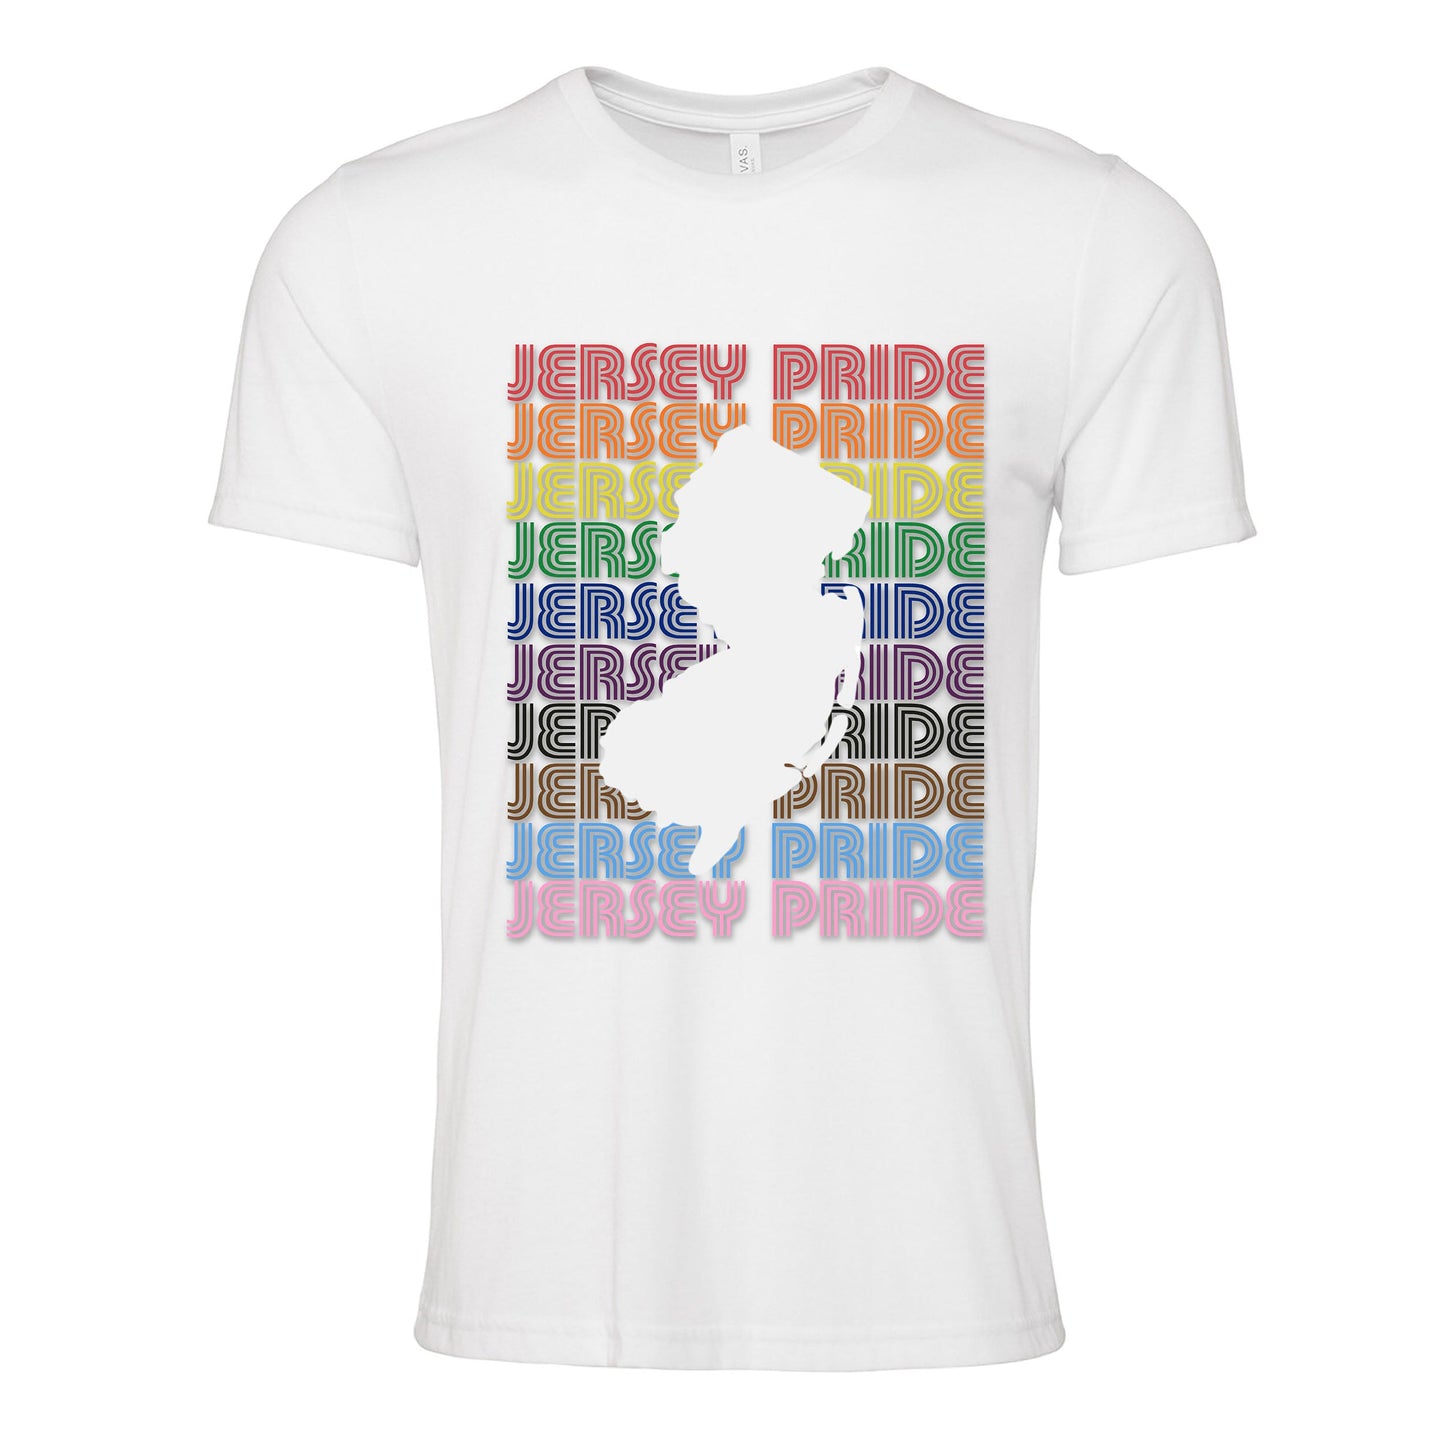 Jersey Pride Shirt